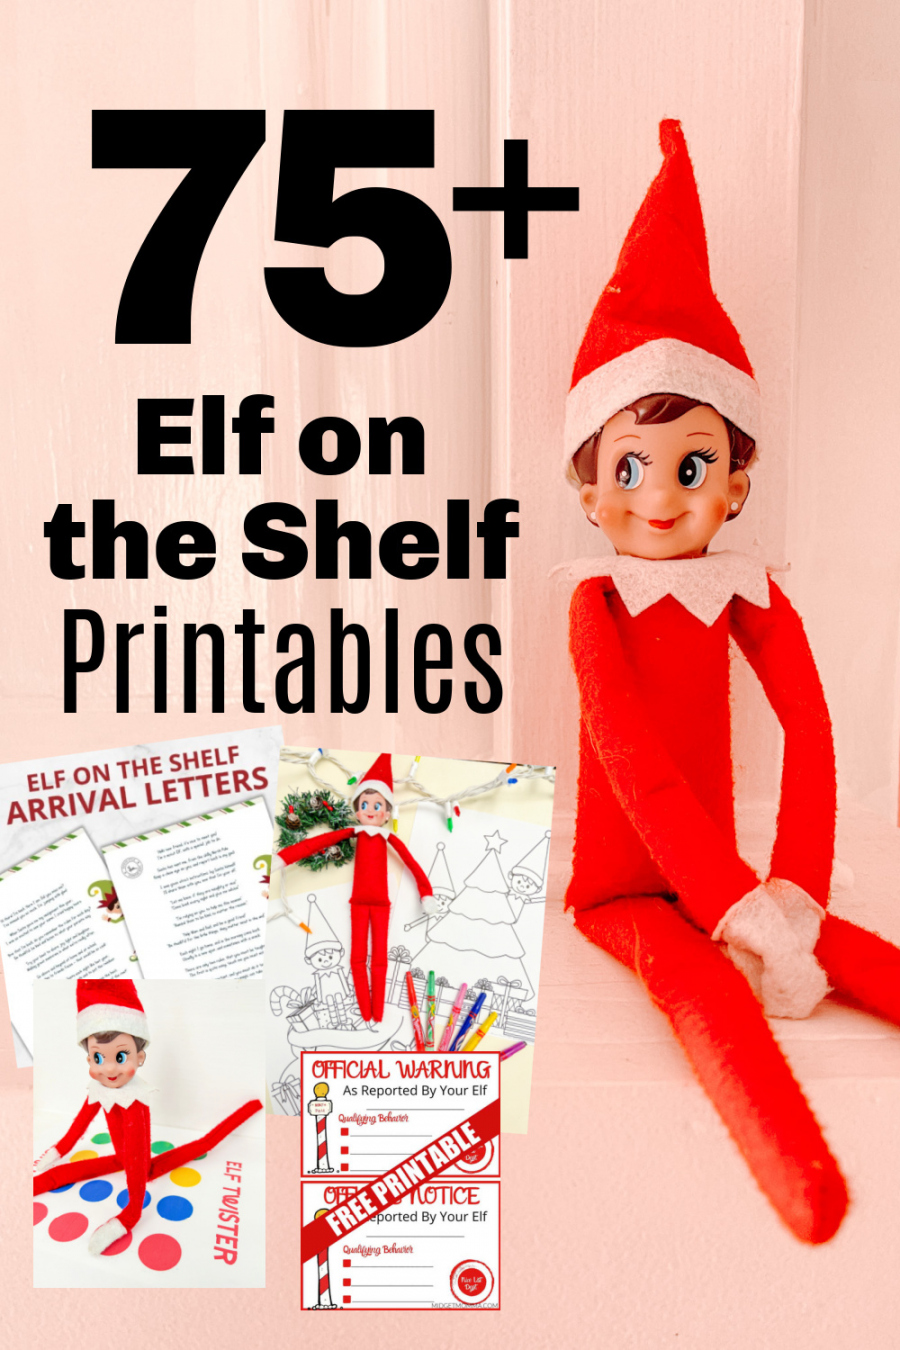 Elf On A Shelf Free Printables - Printable - Ultimate List of FREE Elf on the Shelf Printables - Over